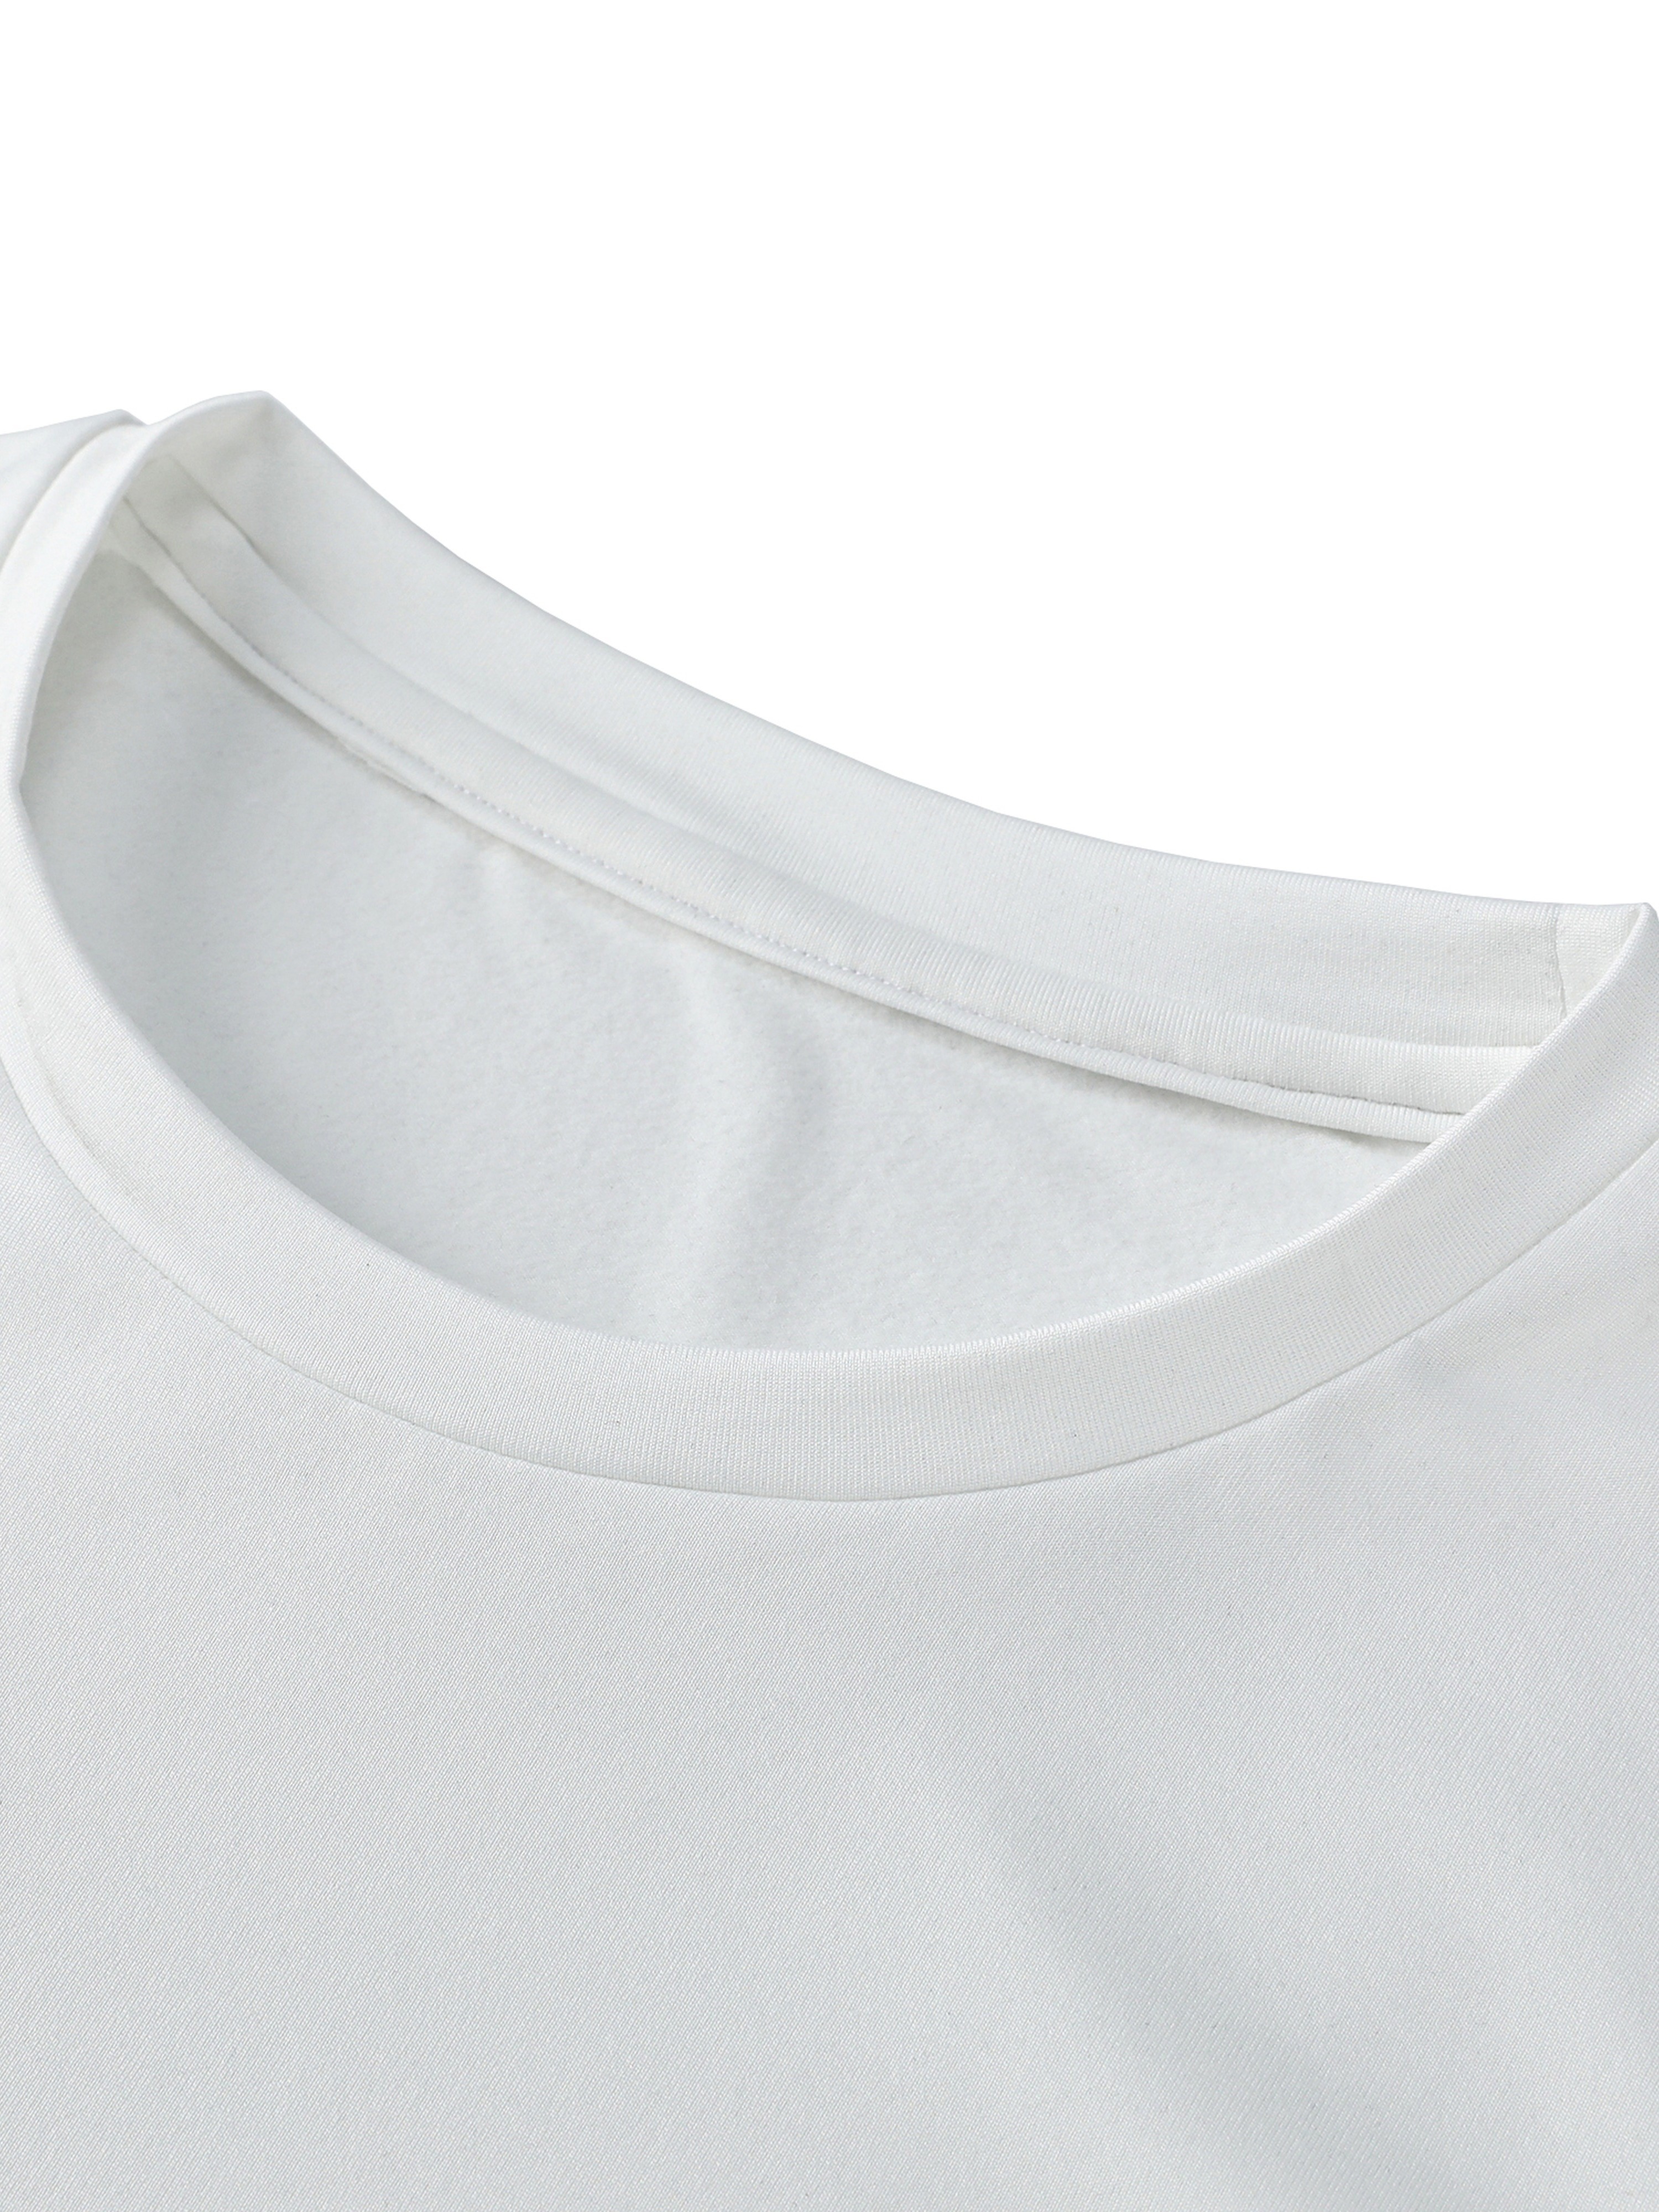 Camiseta térmica de manga larga con cuello redondo para mujer, tops con  fondo de color liso, ropa de mujer